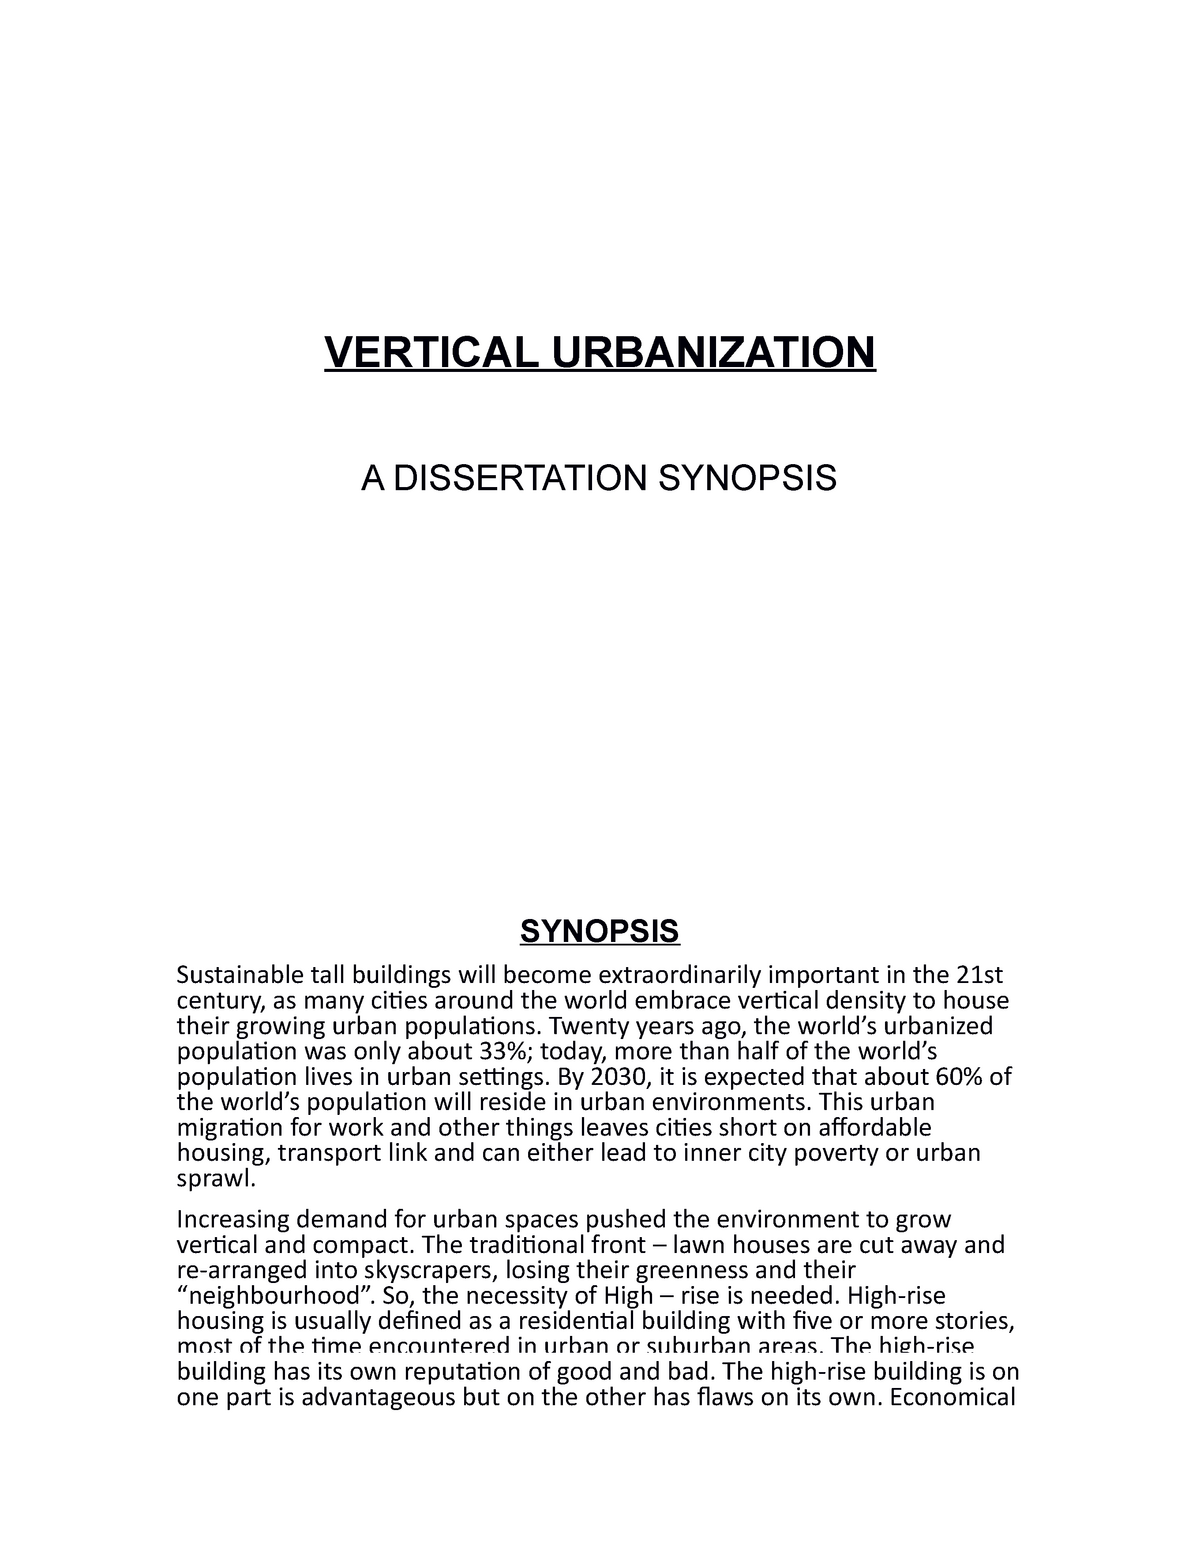 thesis on urbanization